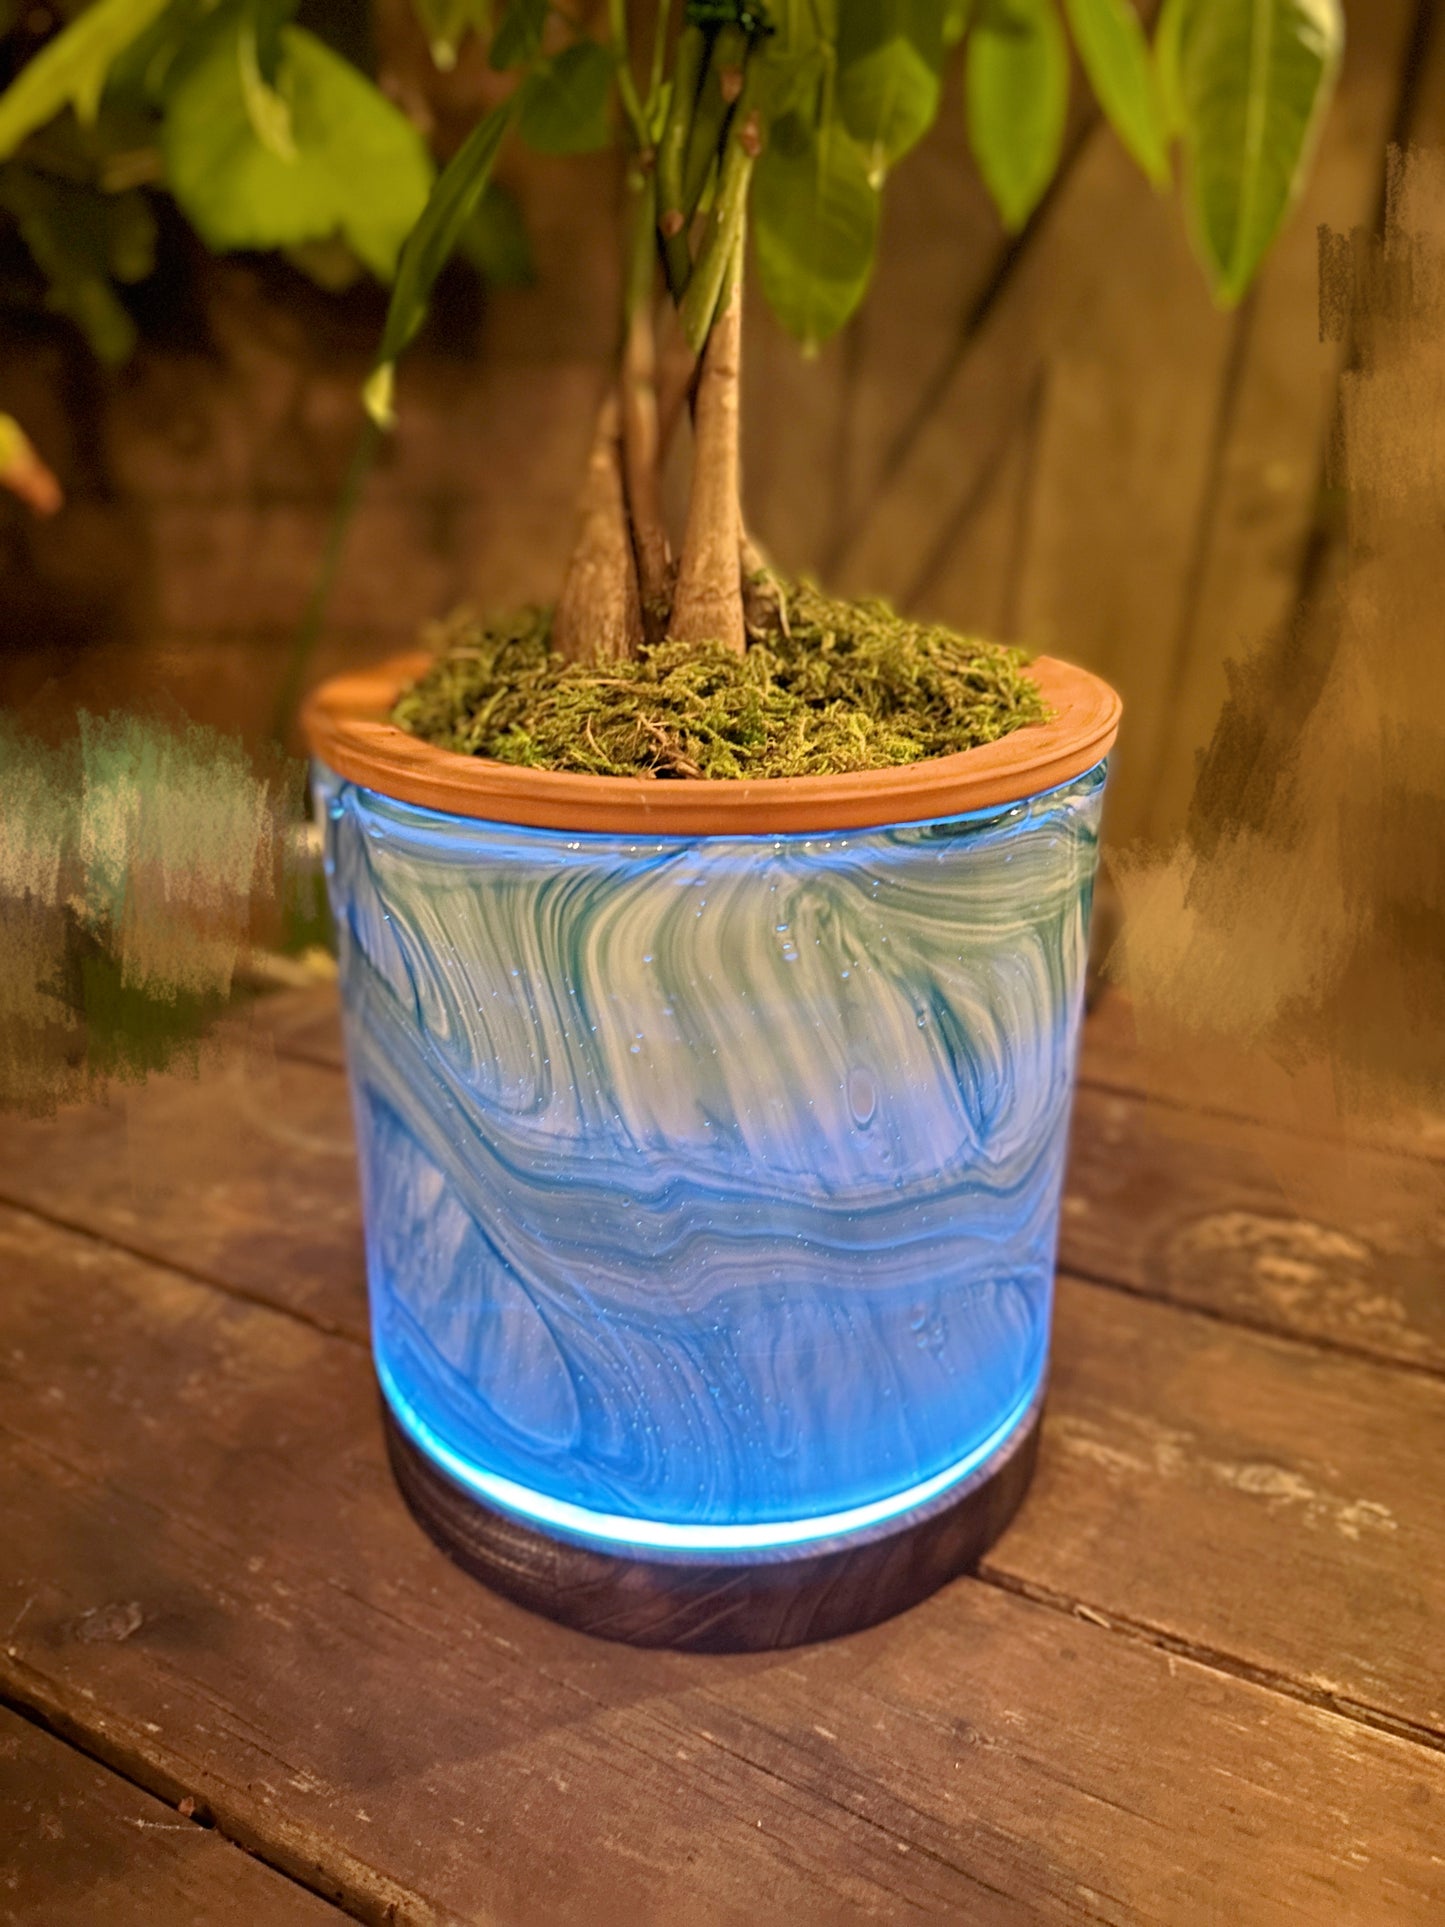 8" Art Glass LED Self Watering Planter